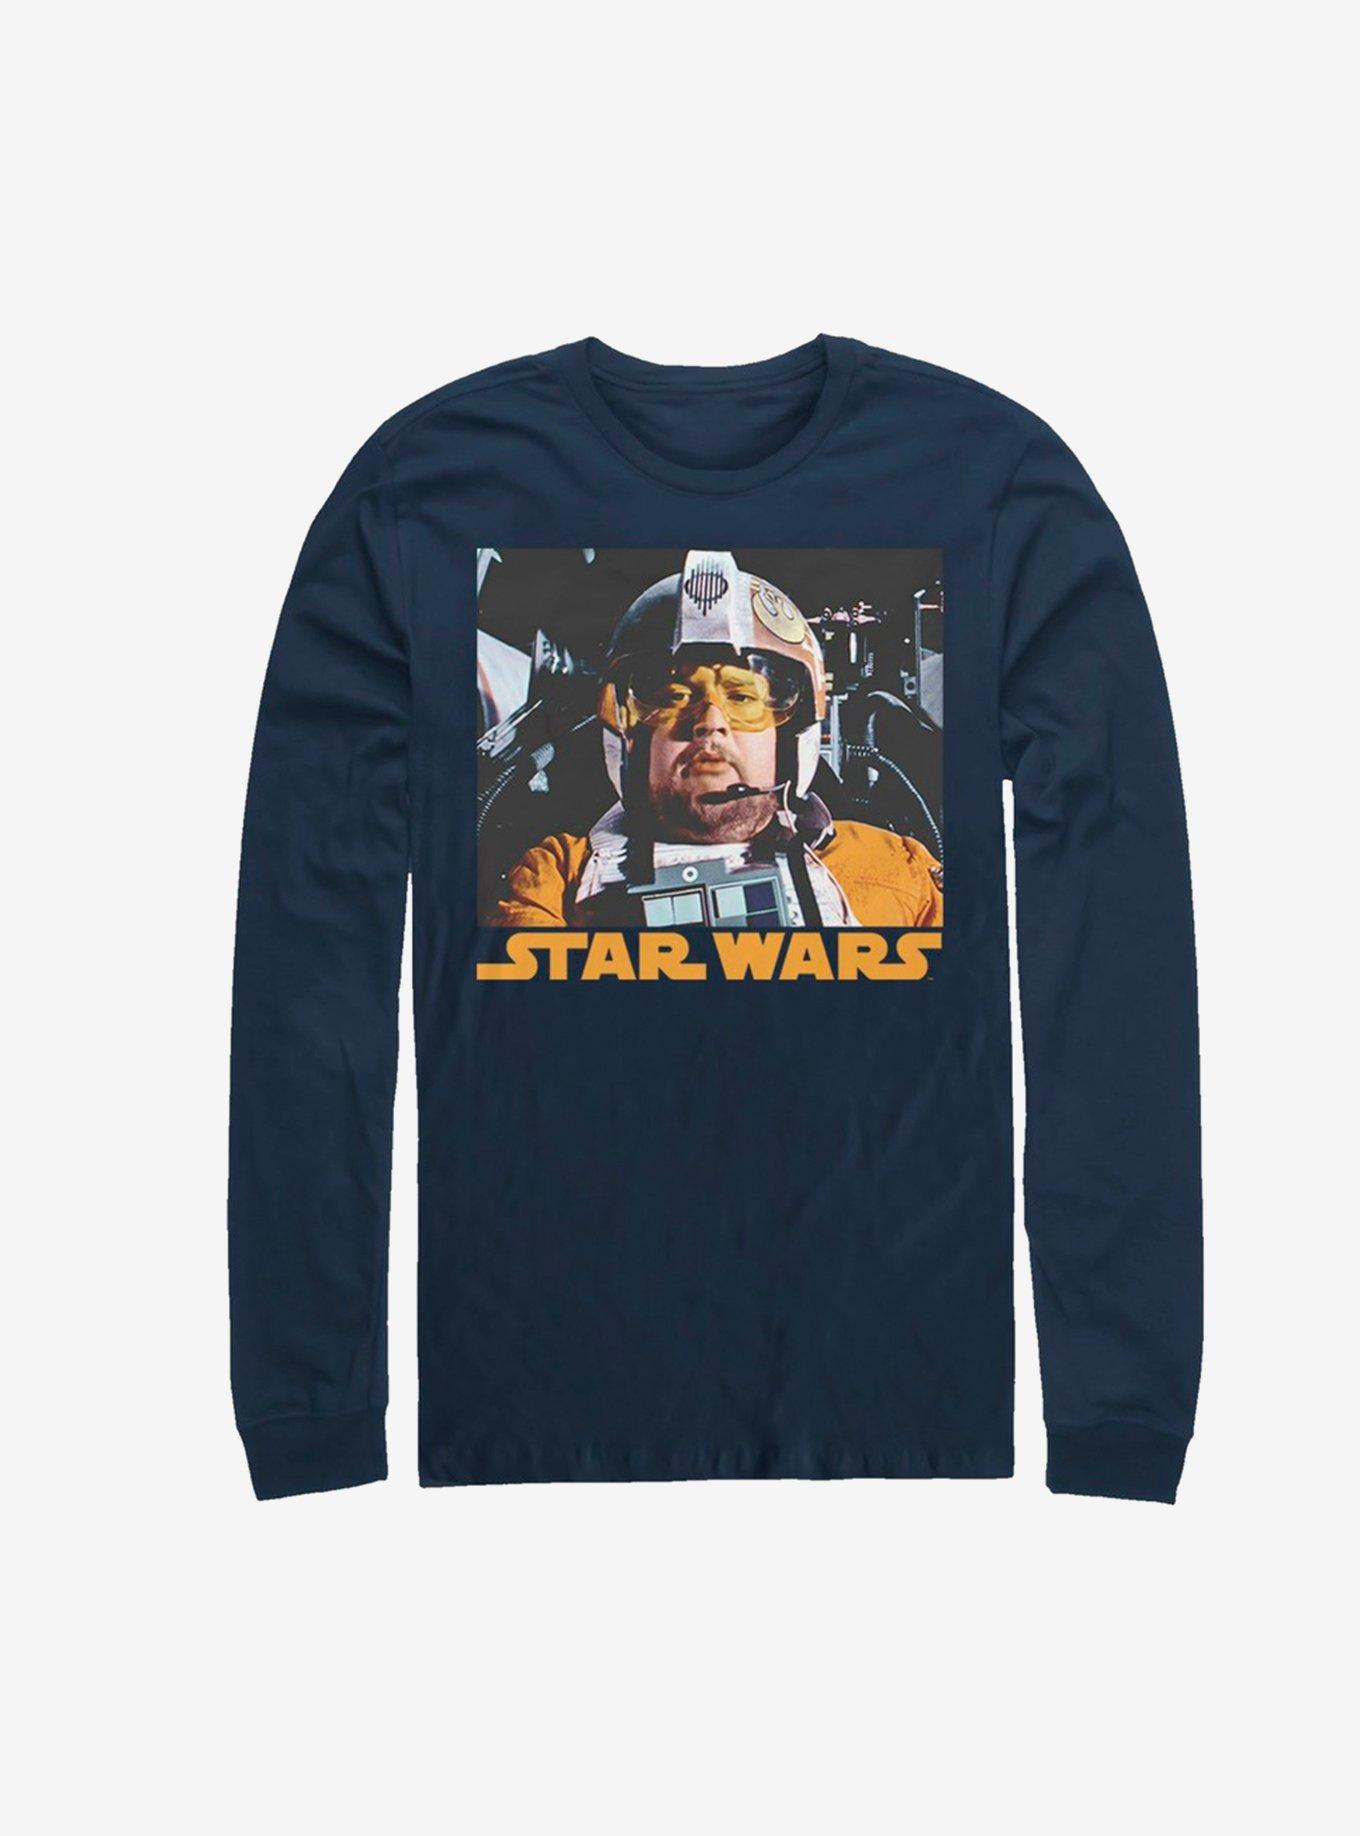 Star Wars Porkins Long-Sleeve T-Shirt